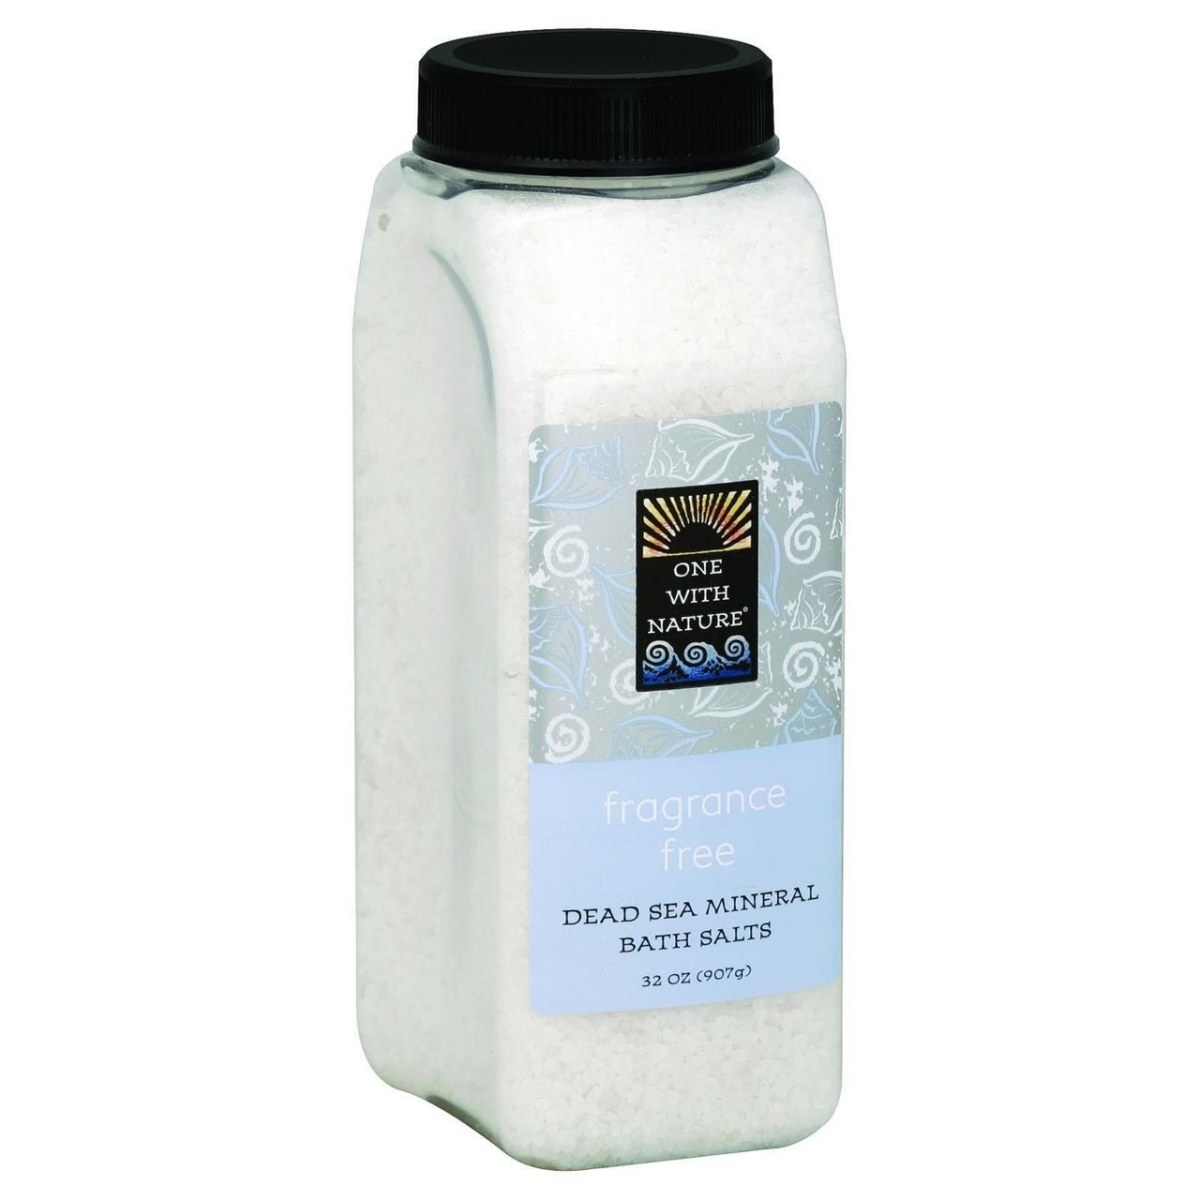 Hg0128405 32 Oz Dead Sea Mineral Bath Salts - Fragrance Free